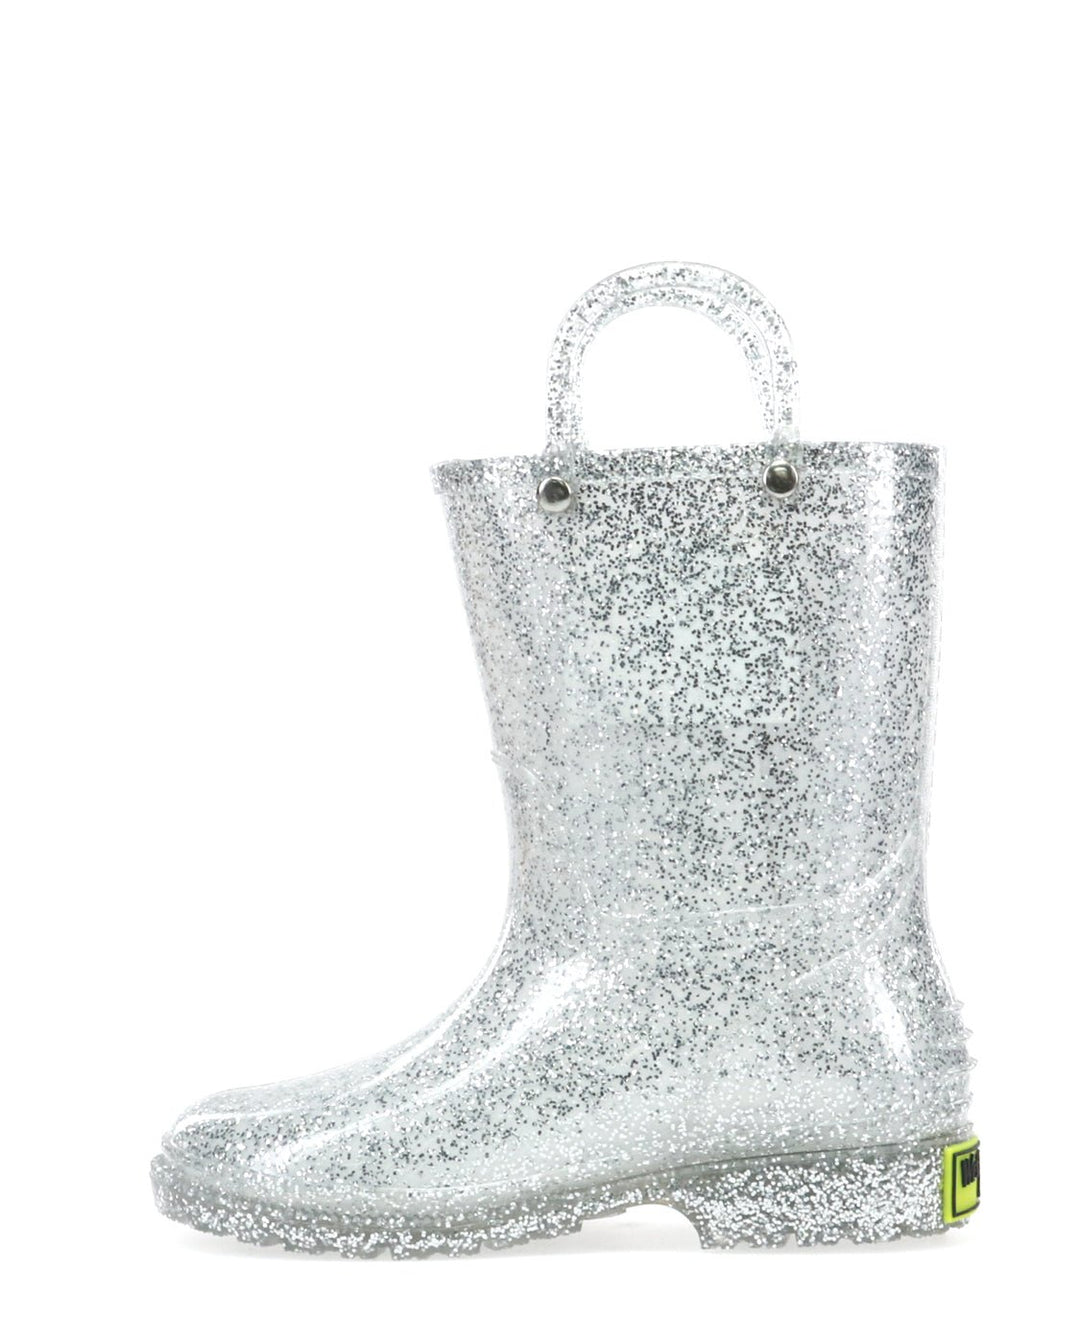 Kids Glitter Rain Boot - Silver - Western Chief